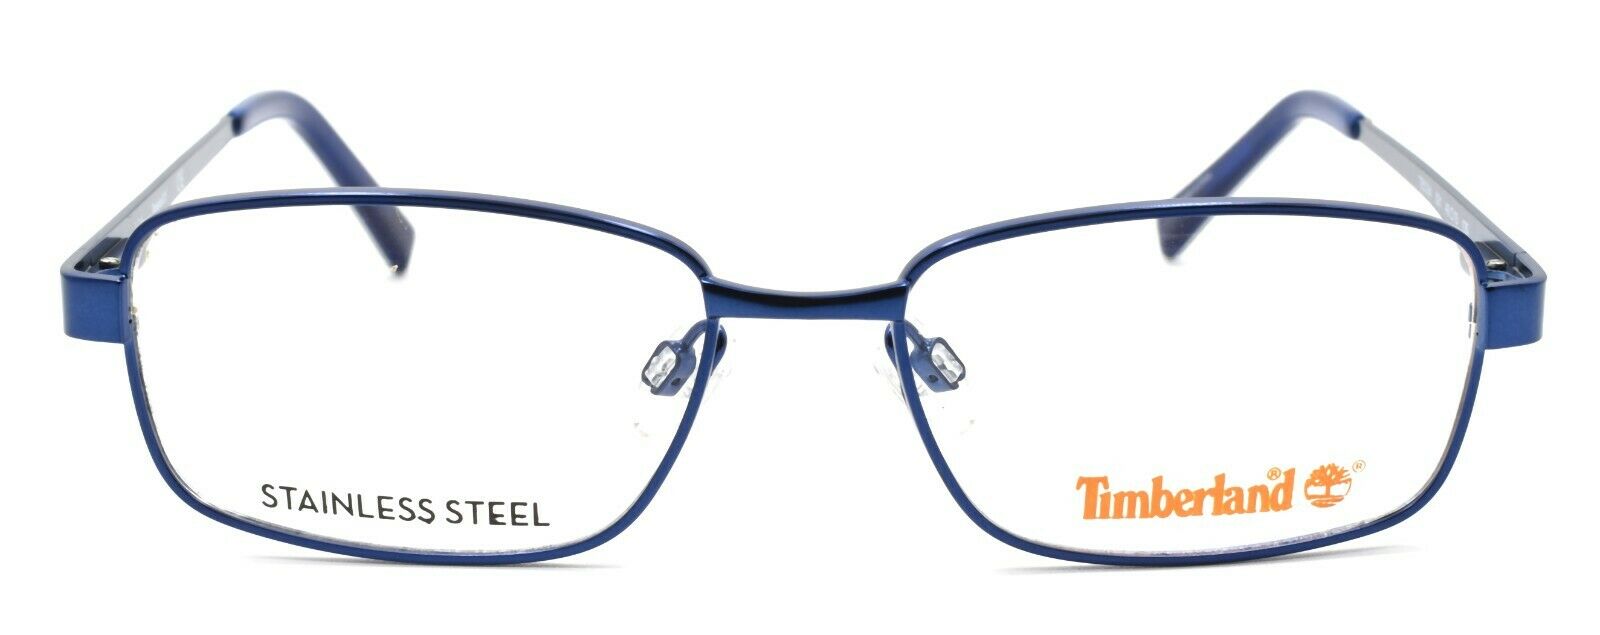 2-TIMBERLAND TB5064 091 Eyeglasses Frames SMALL 49-15-135 Blue + CASE-664689821785-IKSpecs